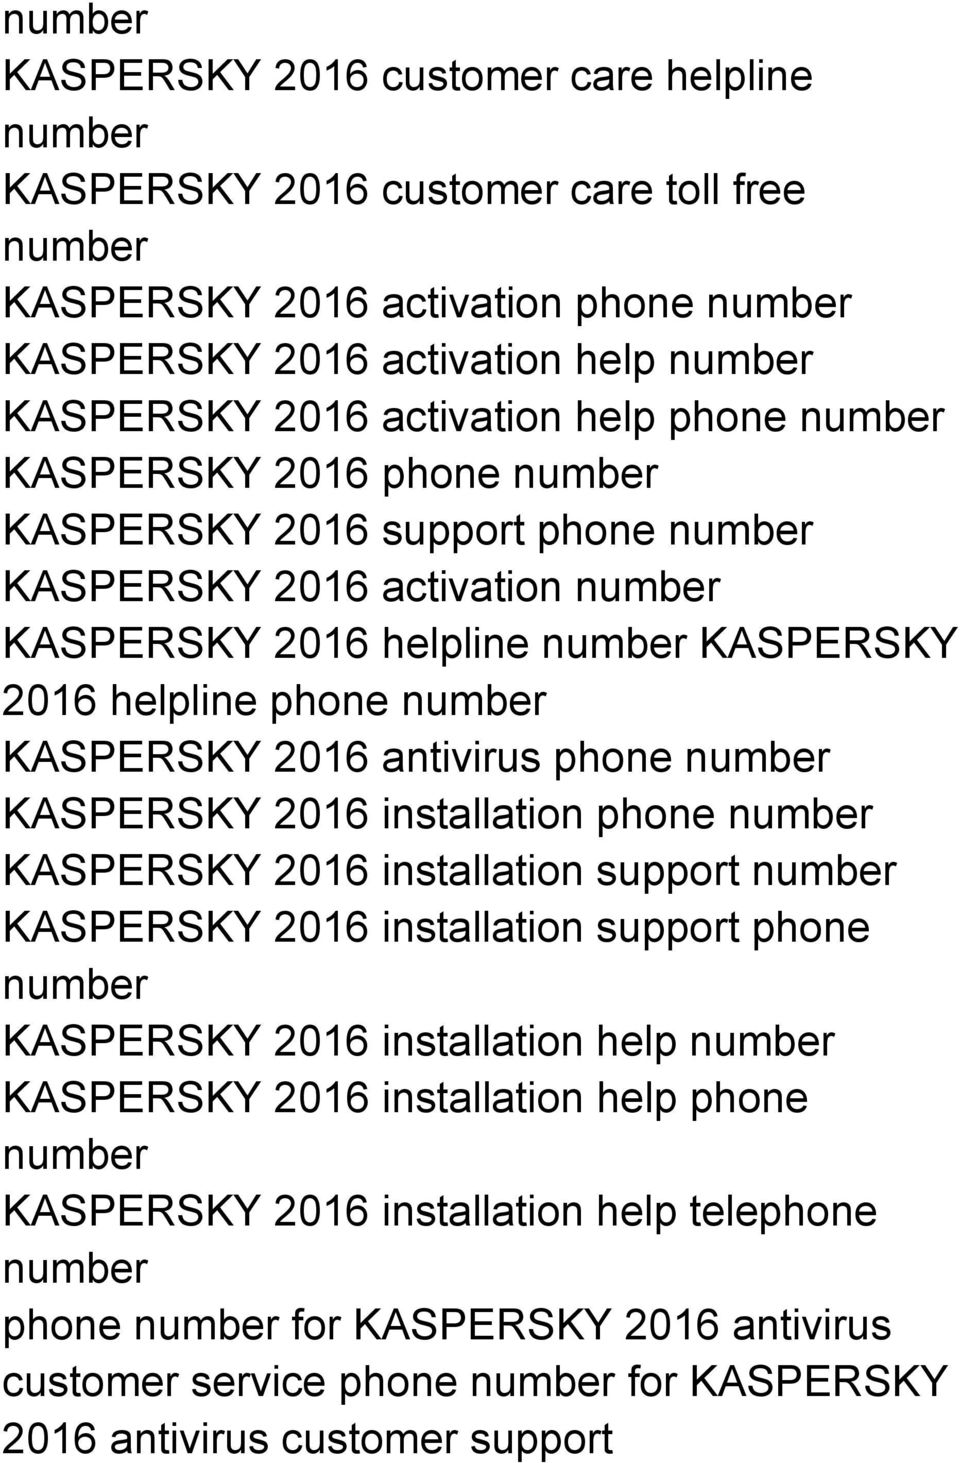 phone KASPERSKY 2016 installation phone KASPERSKY 2016 installation support KASPERSKY 2016 installation support phone KASPERSKY 2016 installation help KASPERSKY 2016